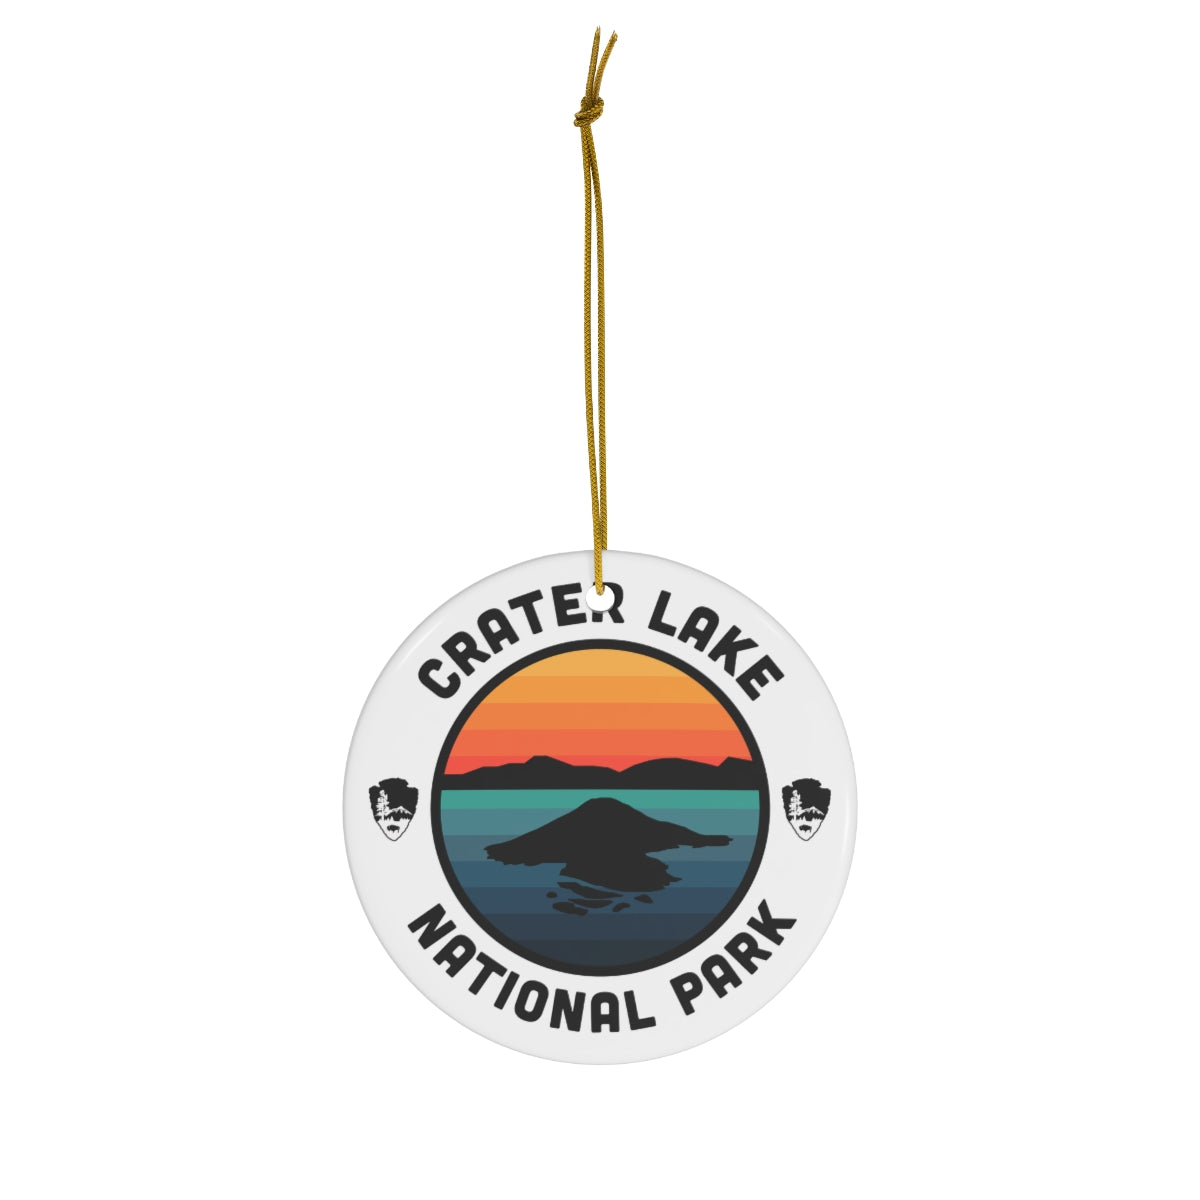 Crater Lake National Park Ornament - Round Emblem Design